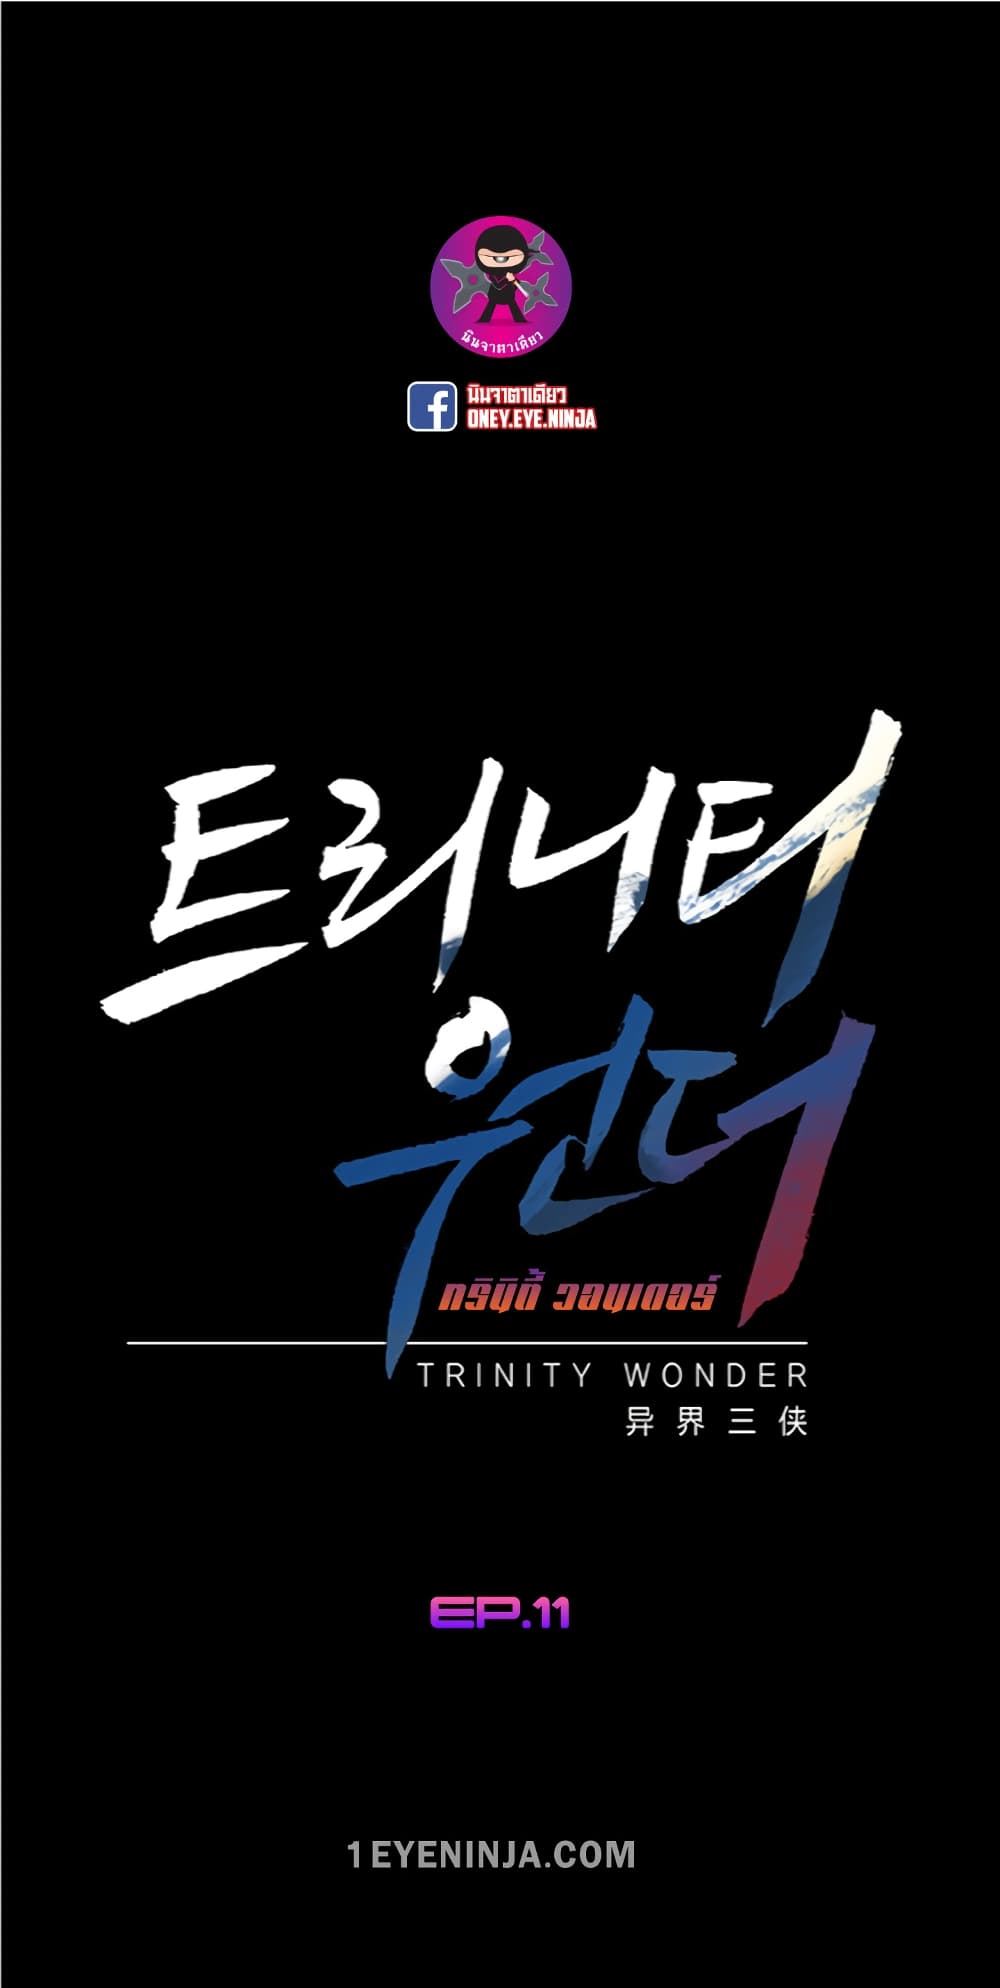 Trinity Wonder 11-11